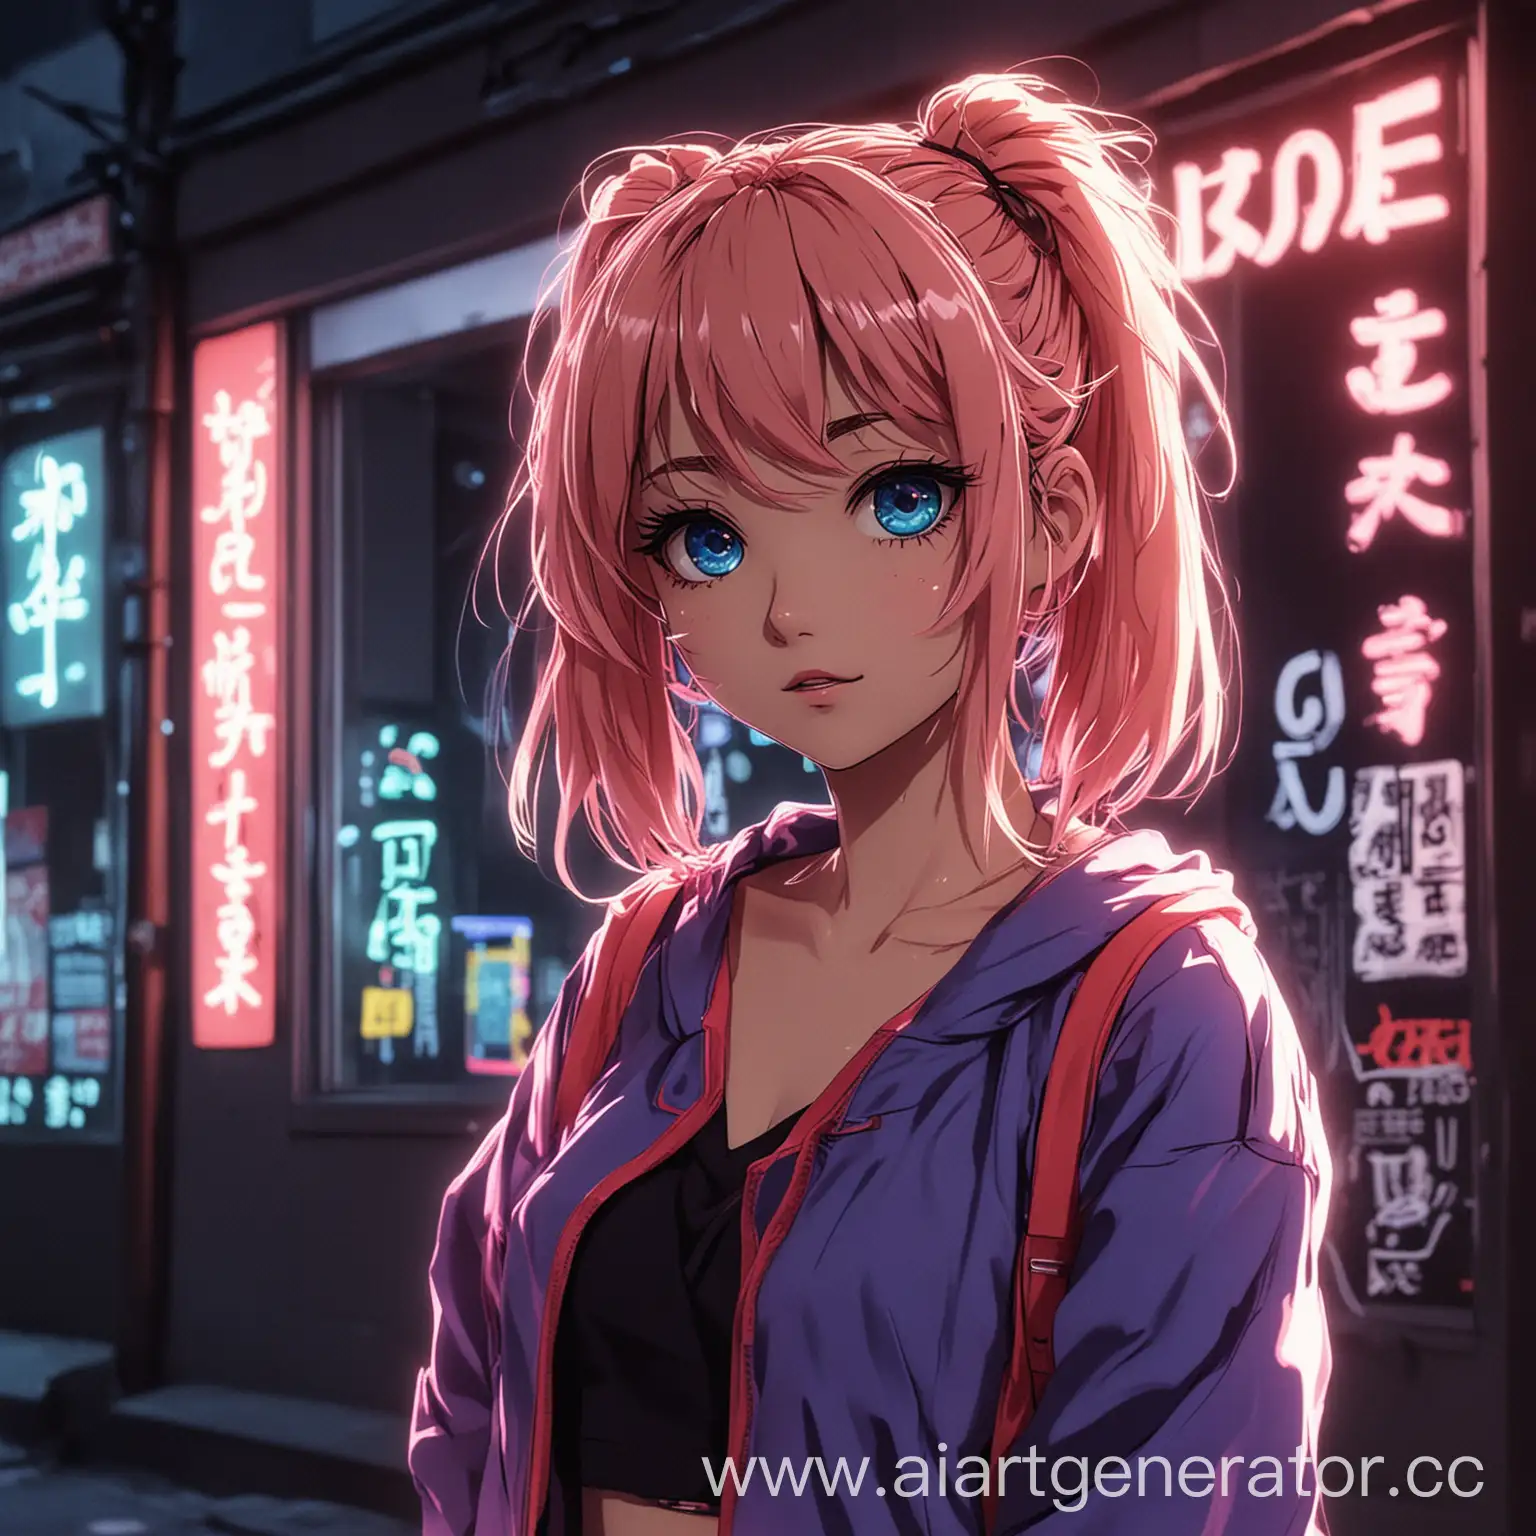 Vibrant-Anime-Neon-Cityscape-at-Night